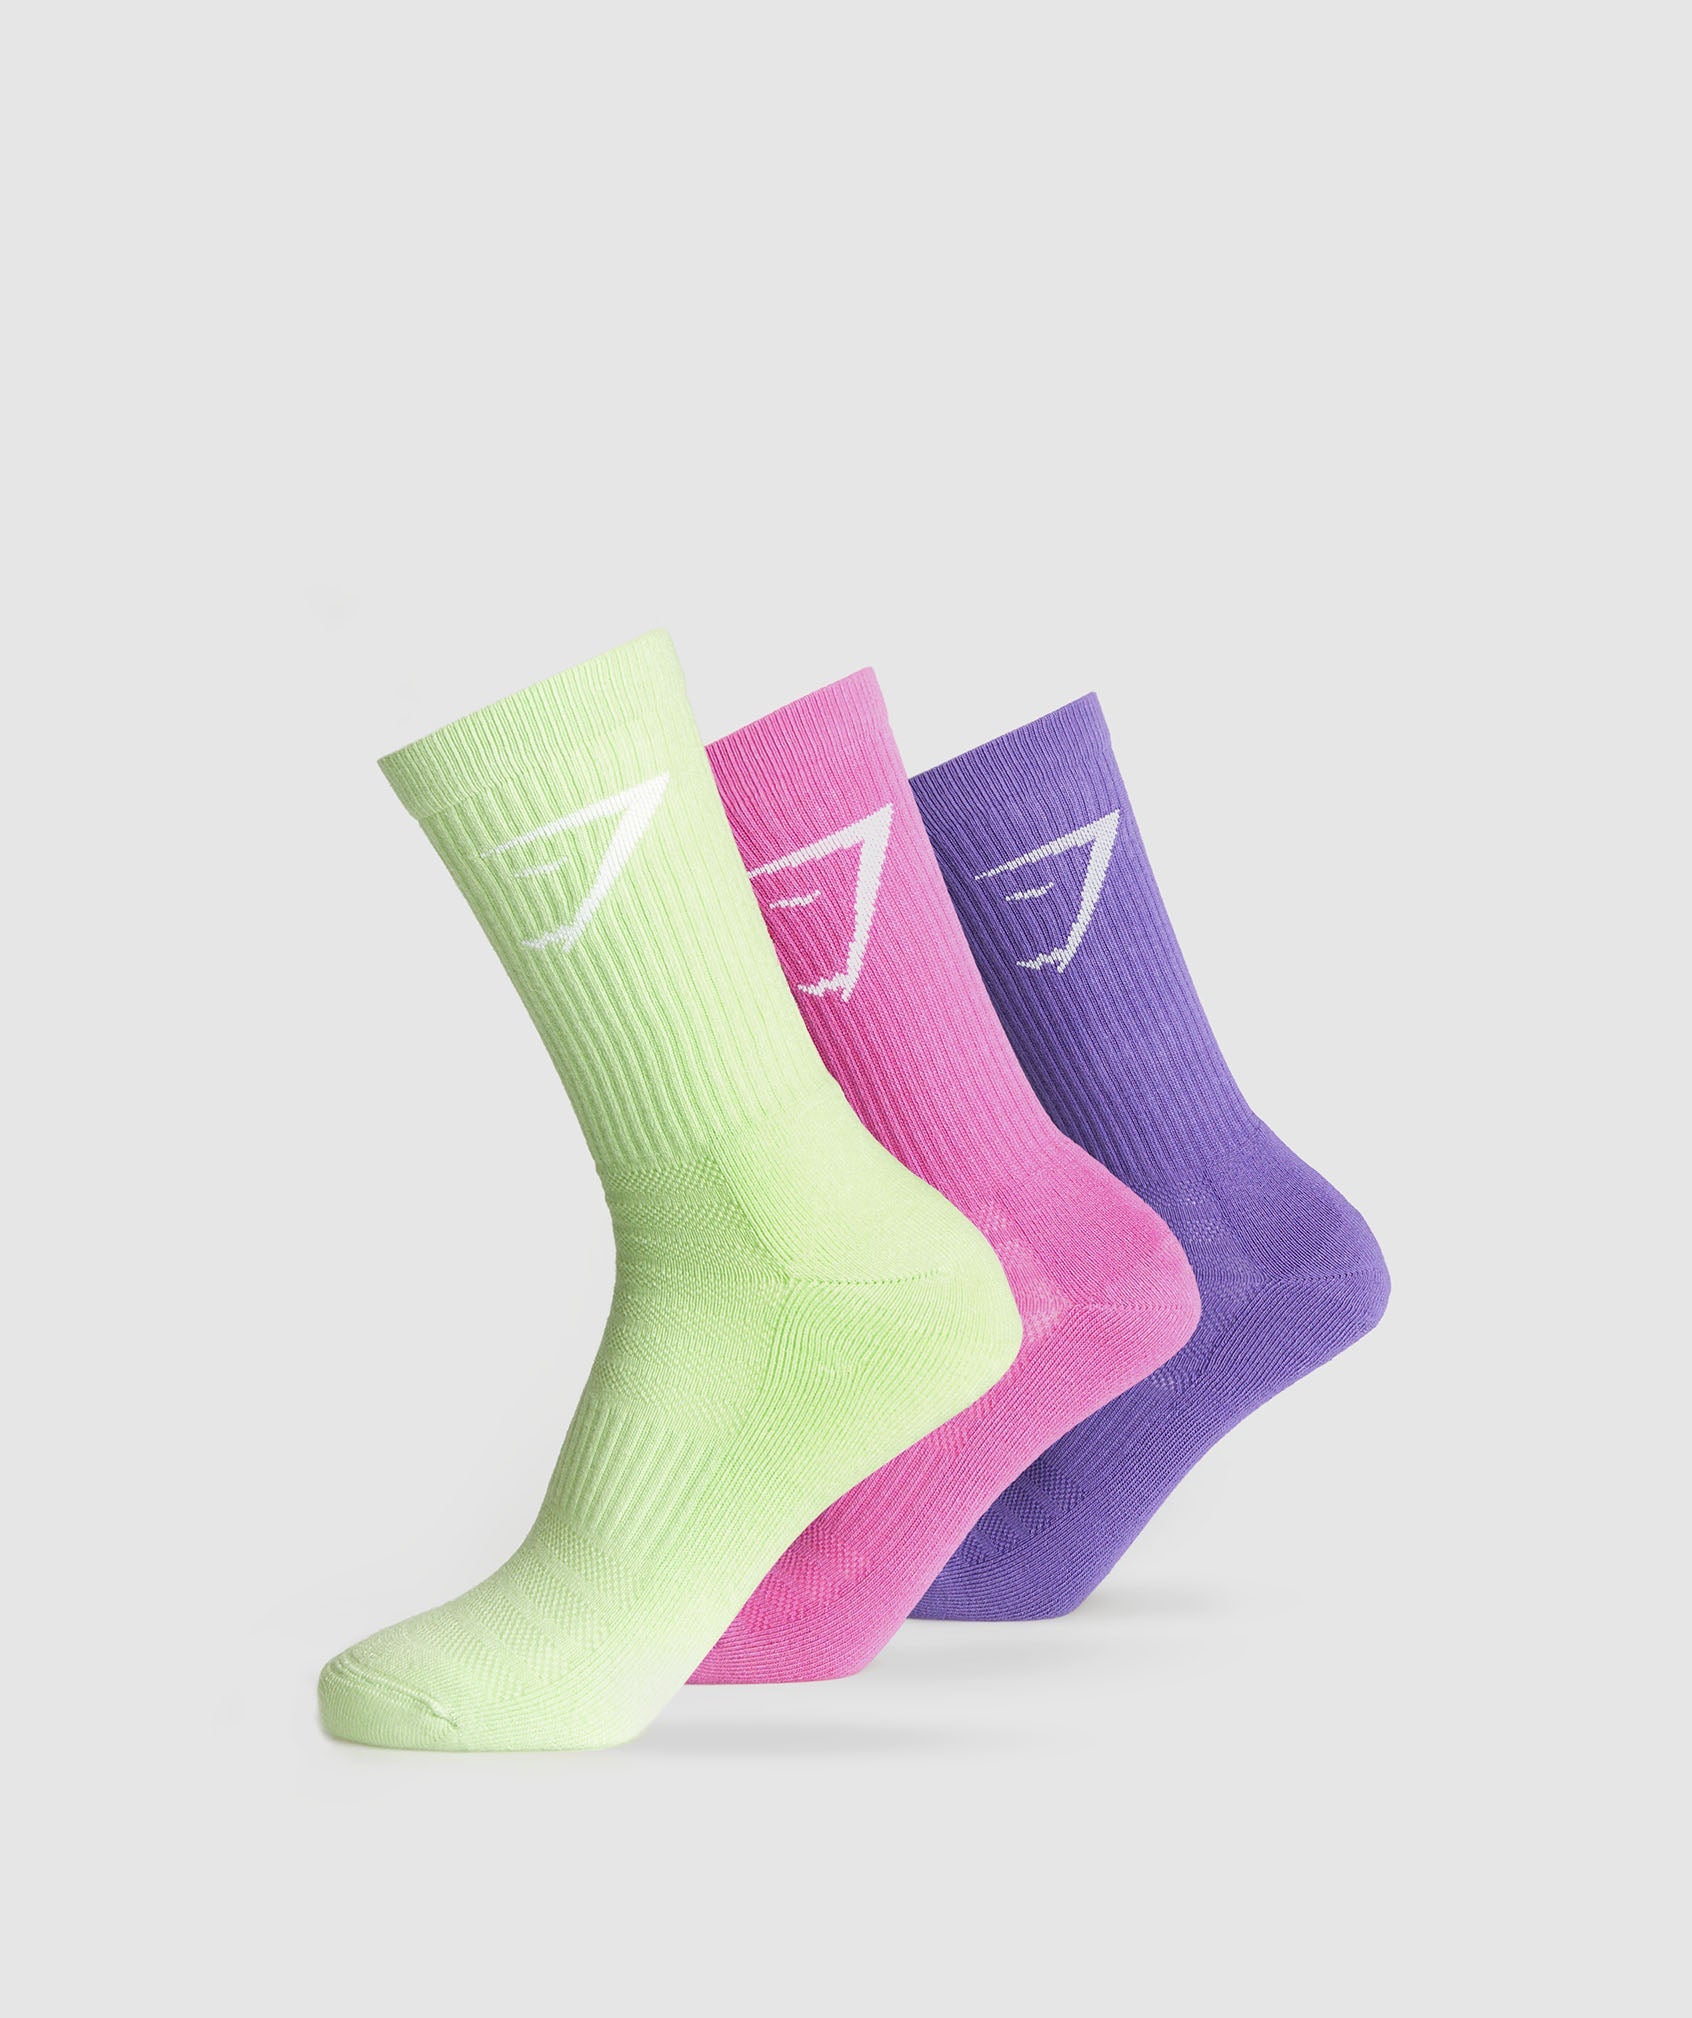 Crew Socks 3pk in Pastel Sage Green/Shelly Pink/Stellar Purple - view 1